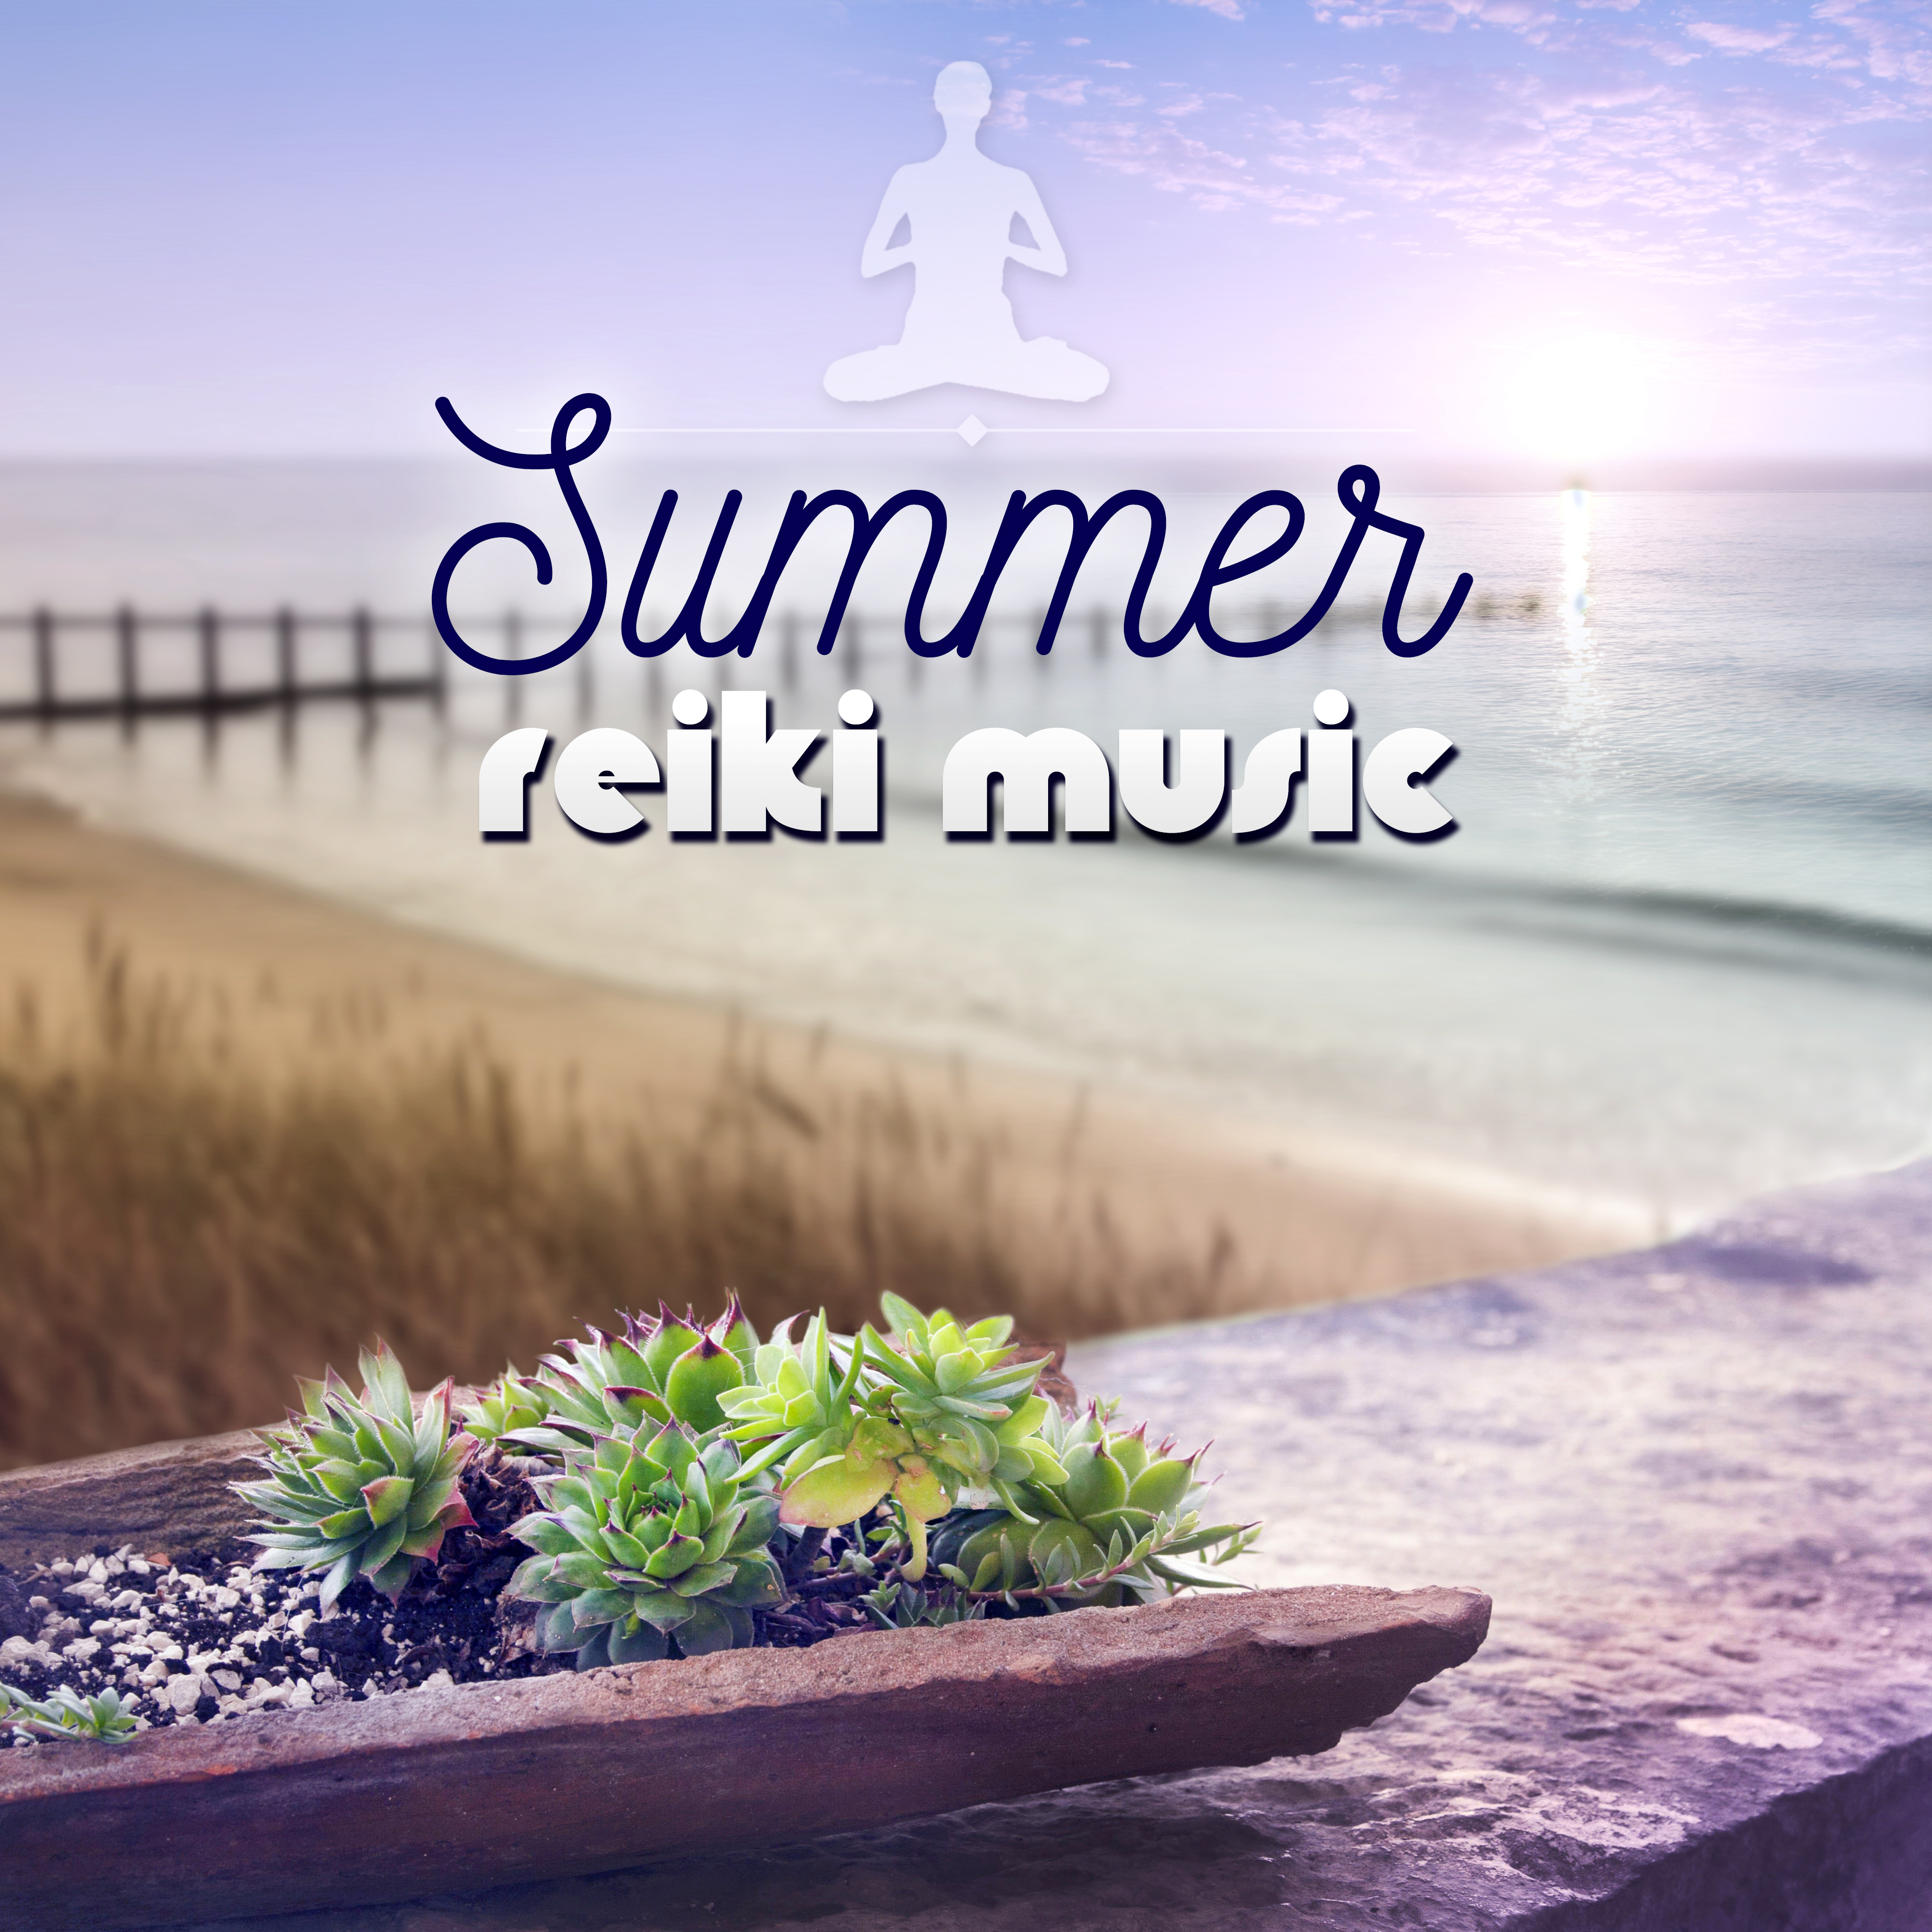 Summer Reiki Music - Relaxing Sounds for Wellness Spa, Buddha Lounge Bar, Awaken with Nature & Just Relax